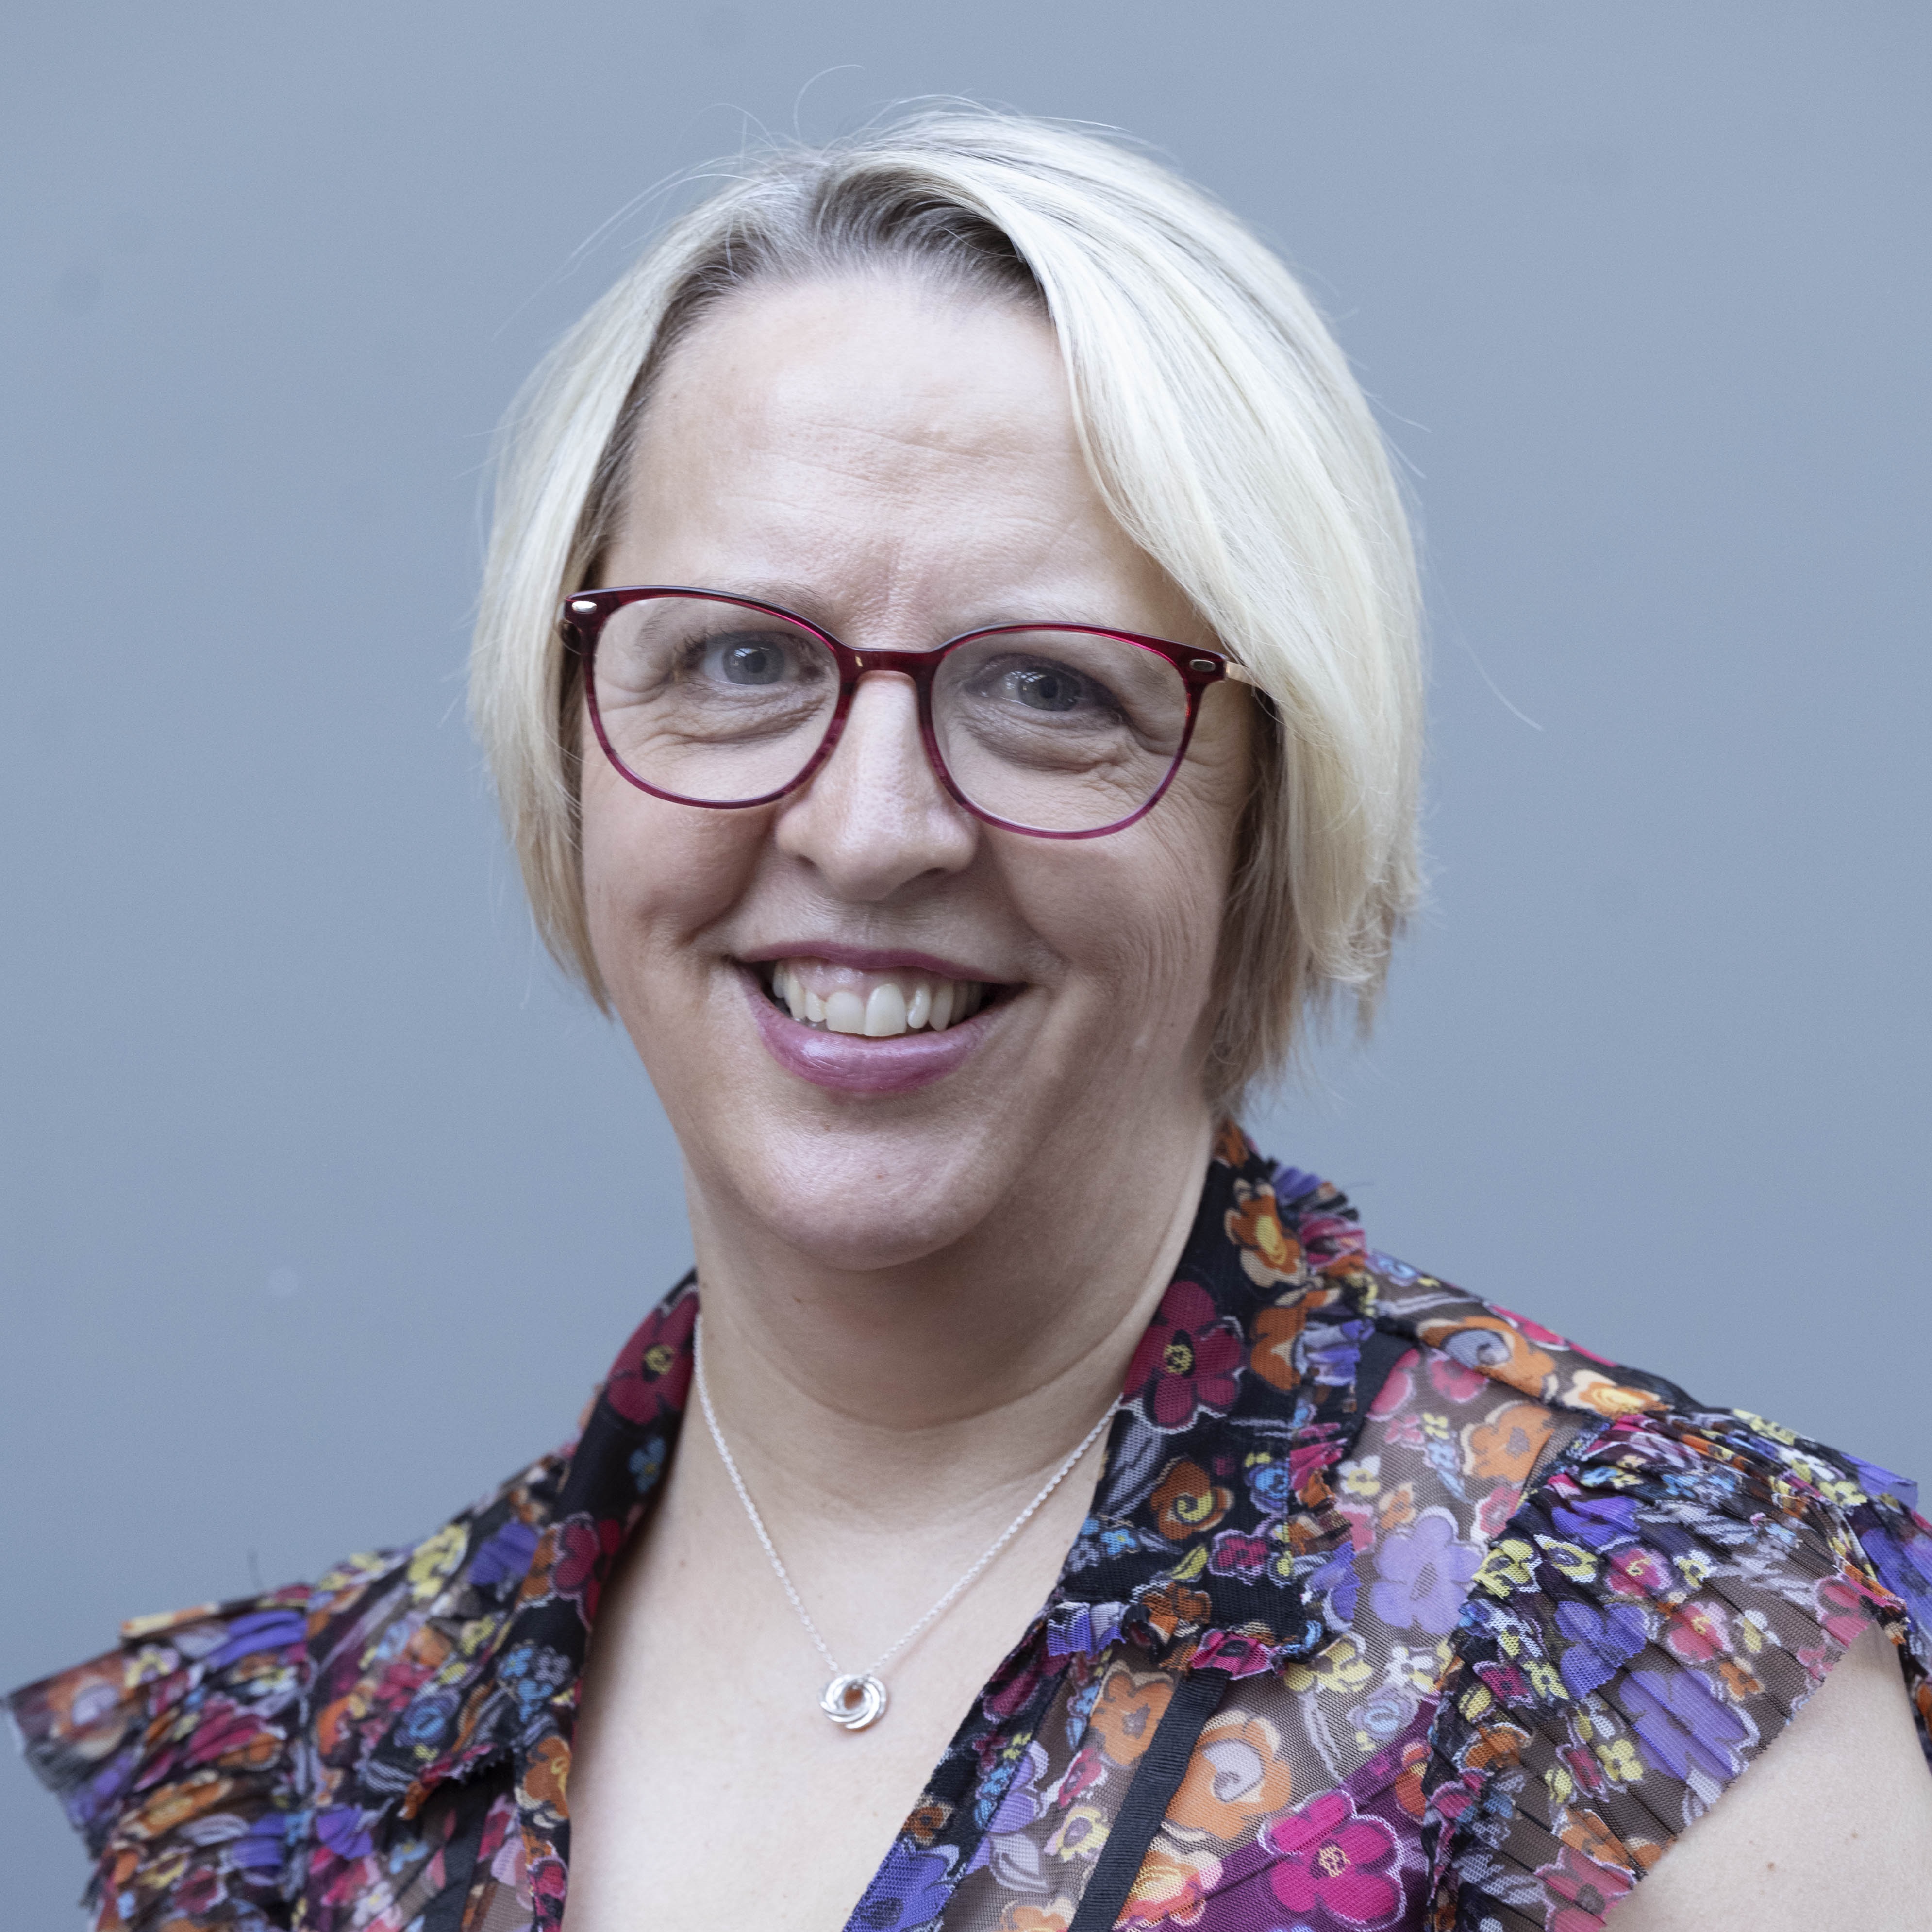 Julie Lamberth, Chair, RCN Scotland Board